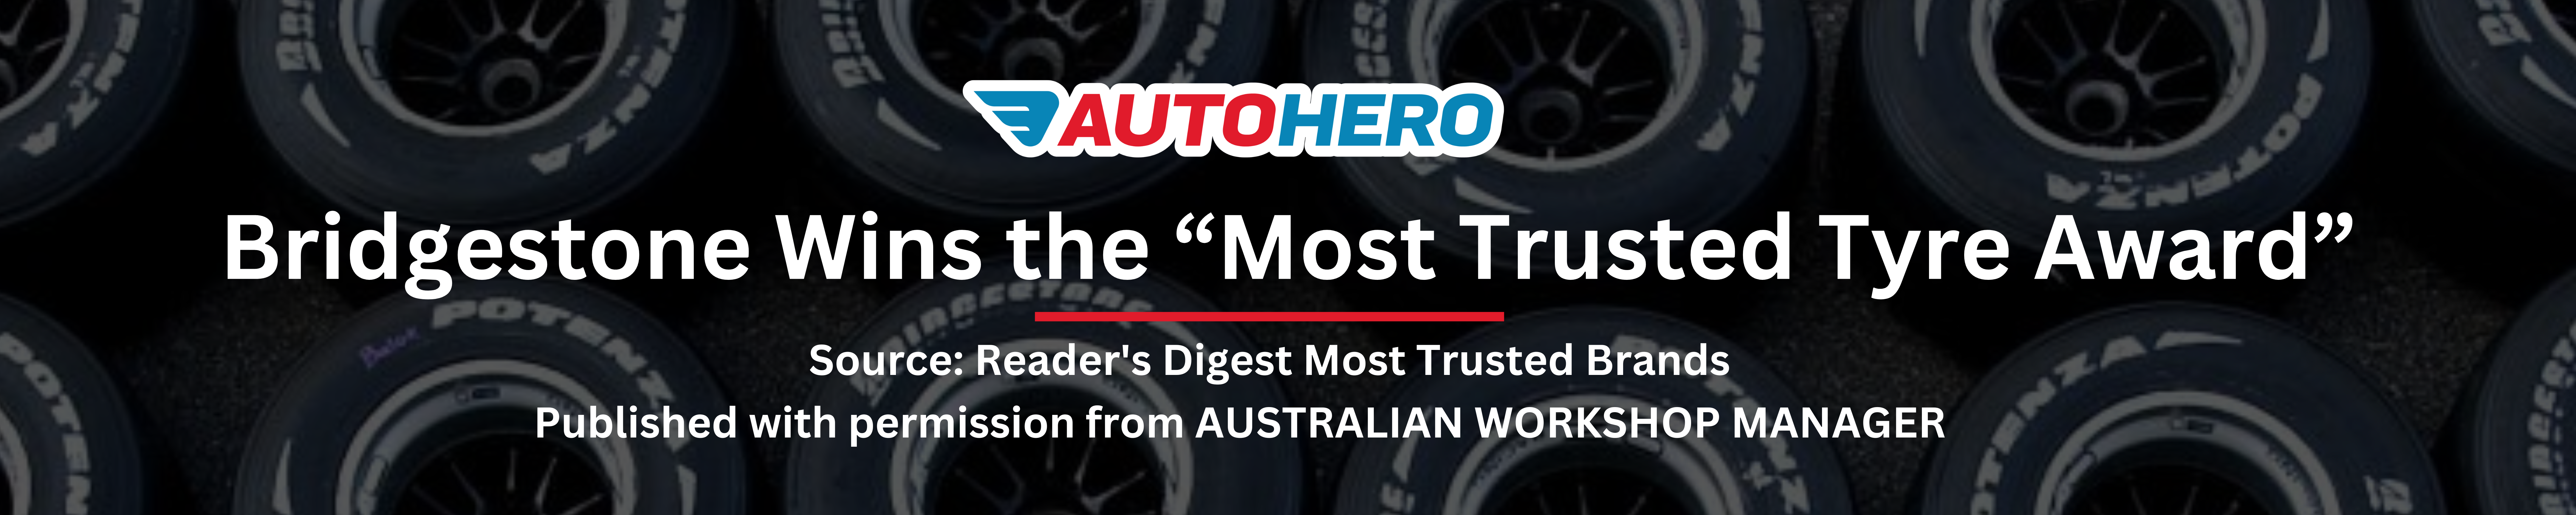 Bridgestone Wins the “Most Trusted Tyre Award”